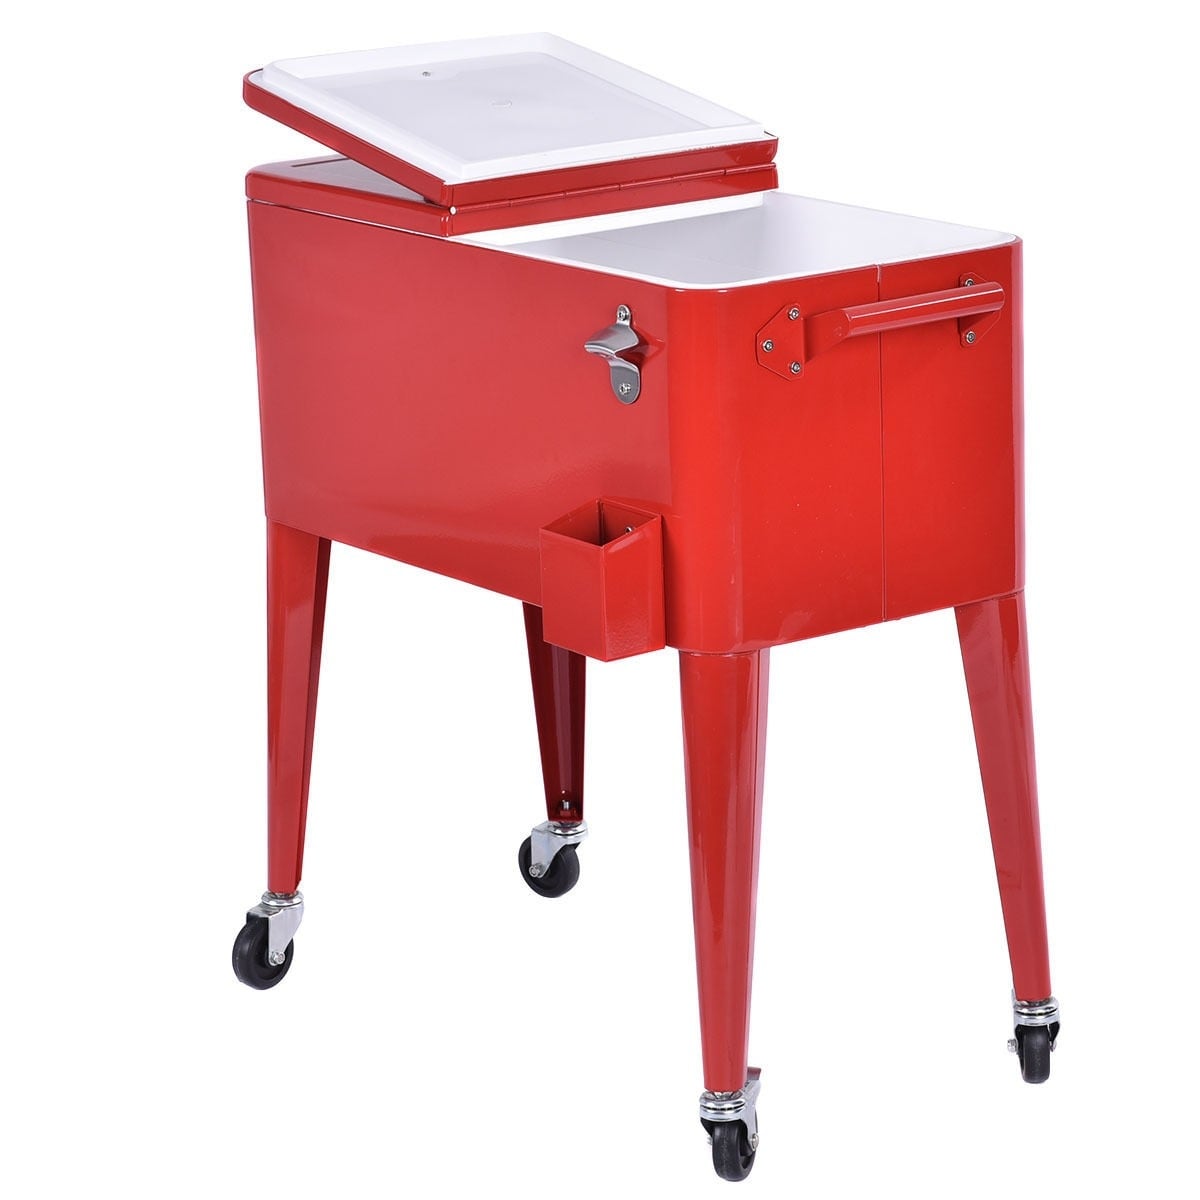 Red Portable Outdoor Patio Cooler Cart - 35.8